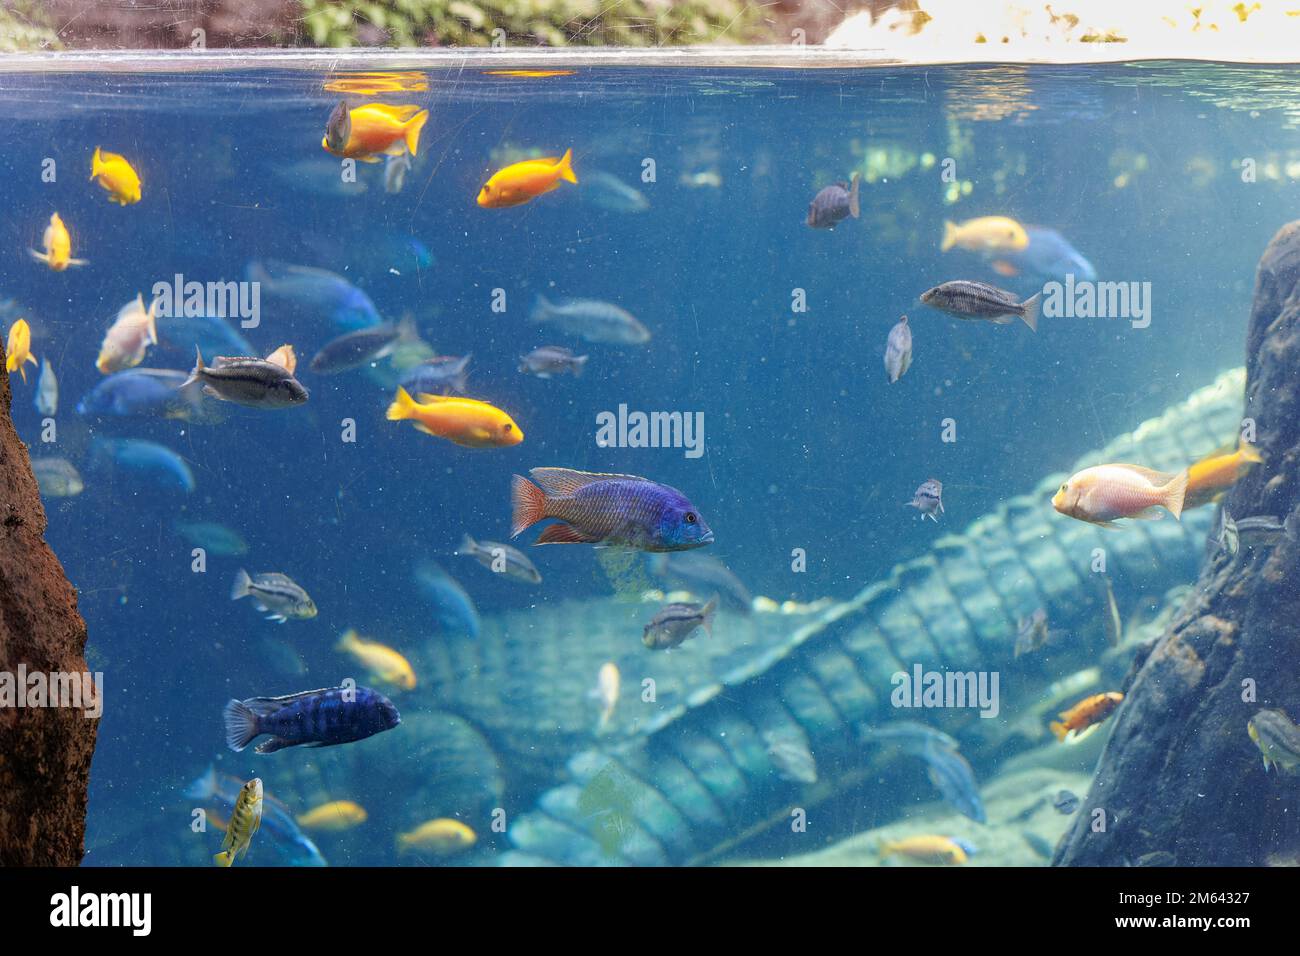 Crocodile in an aquarium in dark blue water. Stock Photo by  ©DzmitRock87@gmail.com 151114800